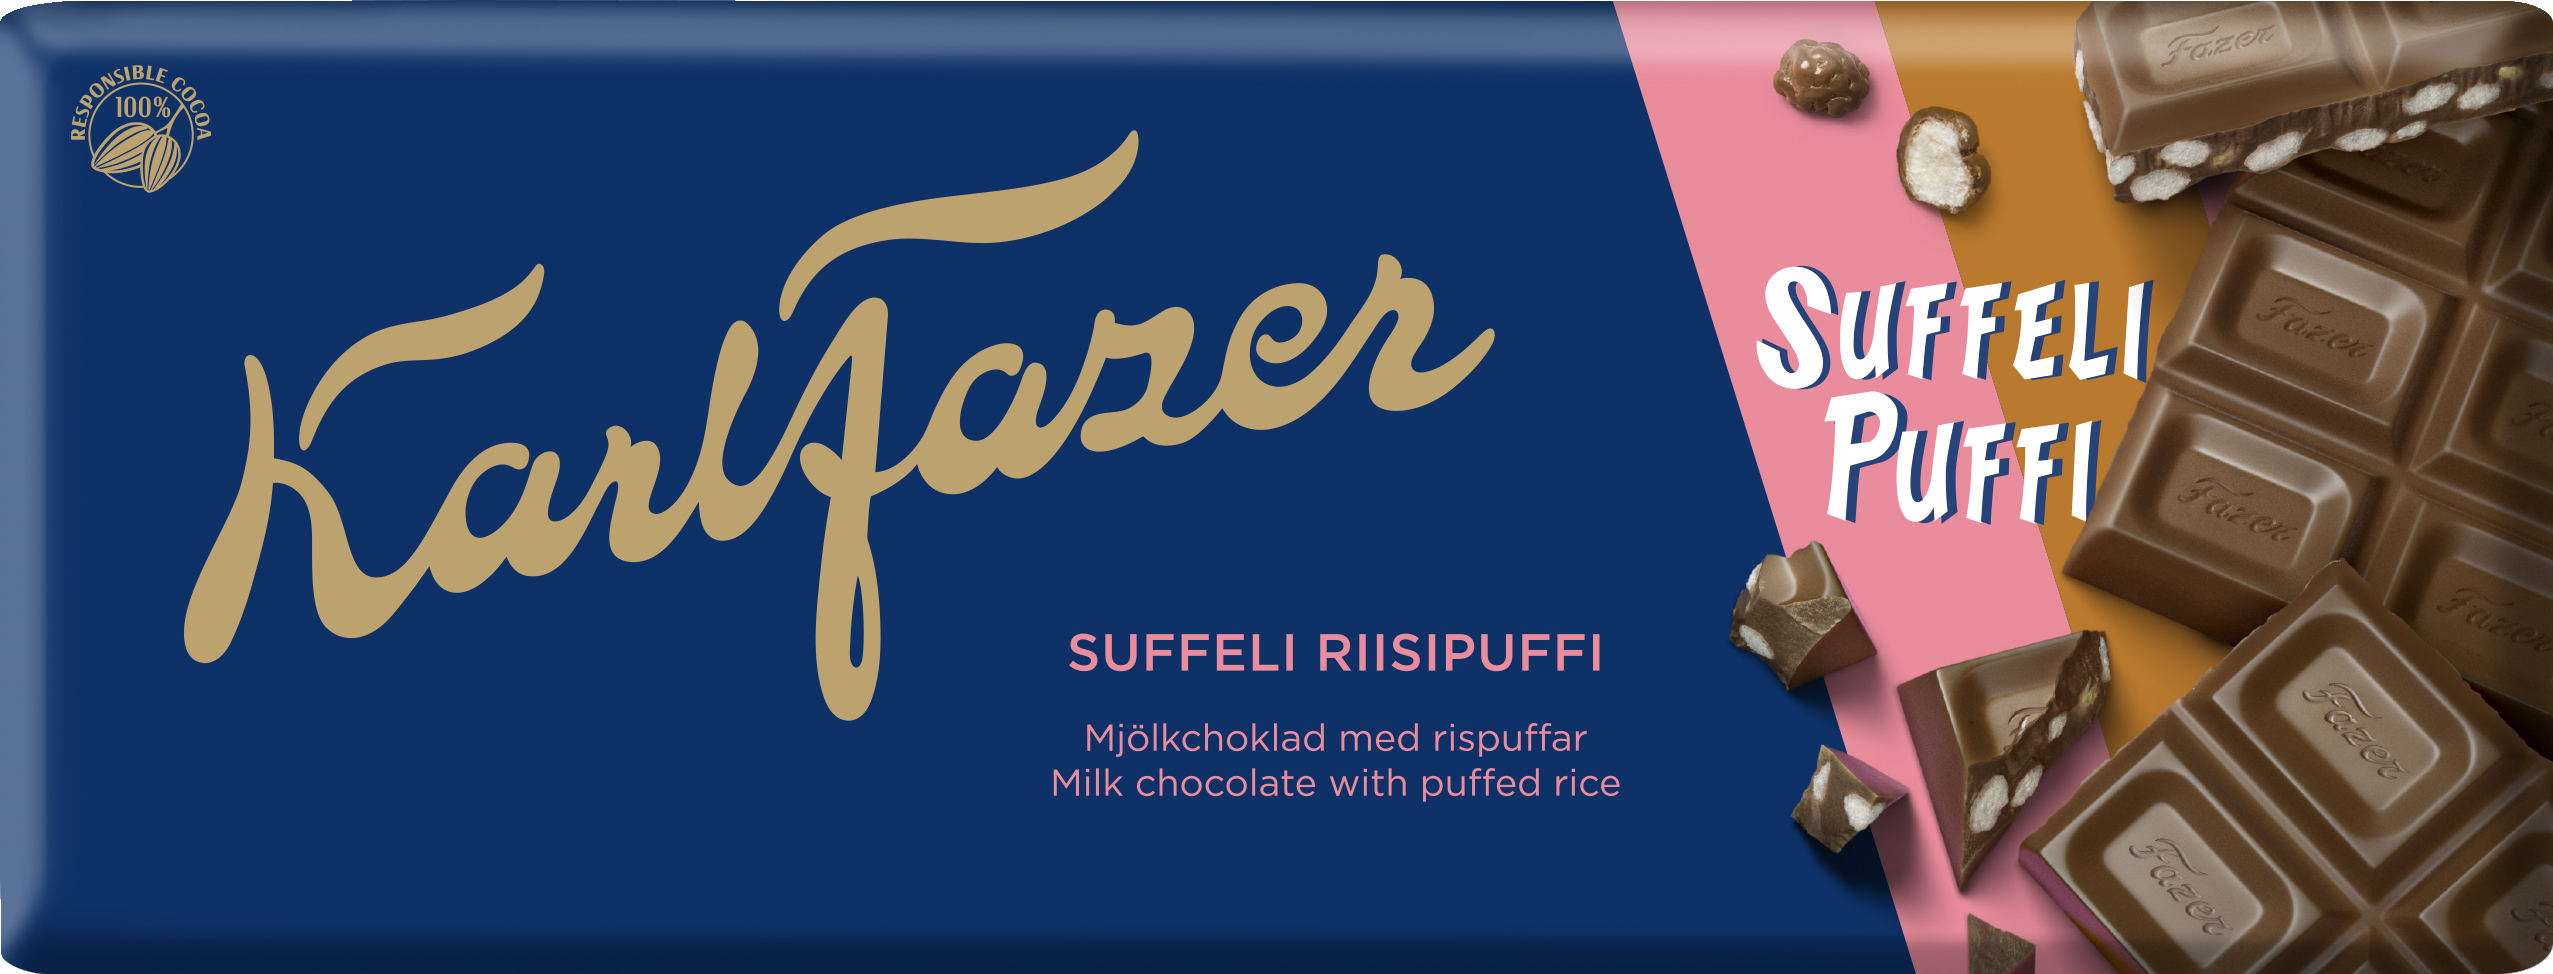 Karl Fazer suklaalevy Suffeli Riisipuffi 185g